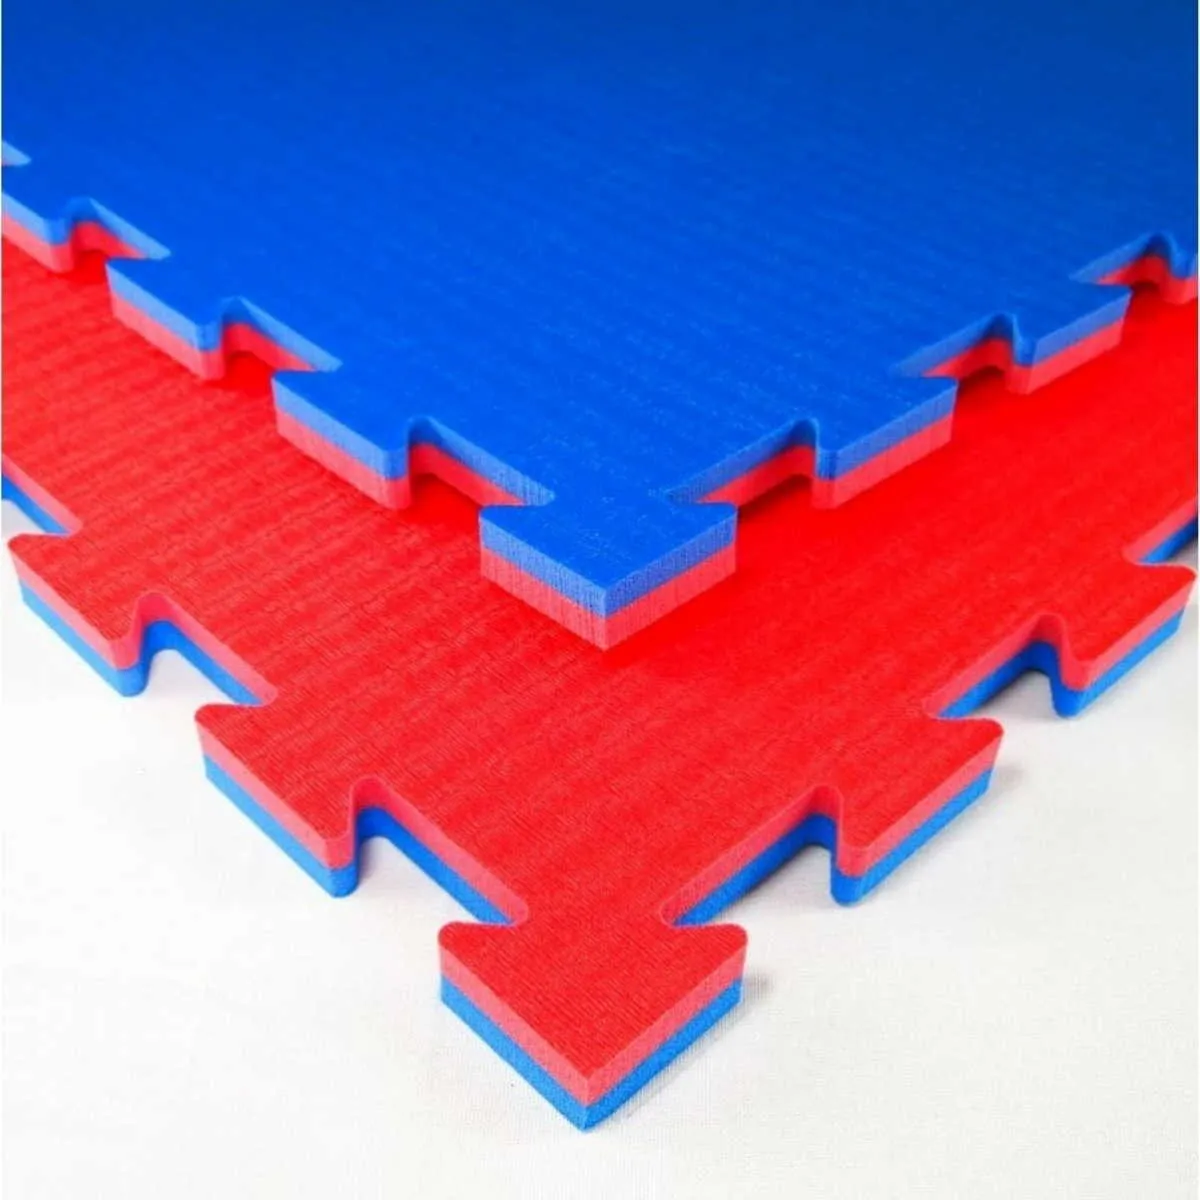 Martial arts mat Tatami K20L red/blue 100 cm x 100 cm x 2 cm